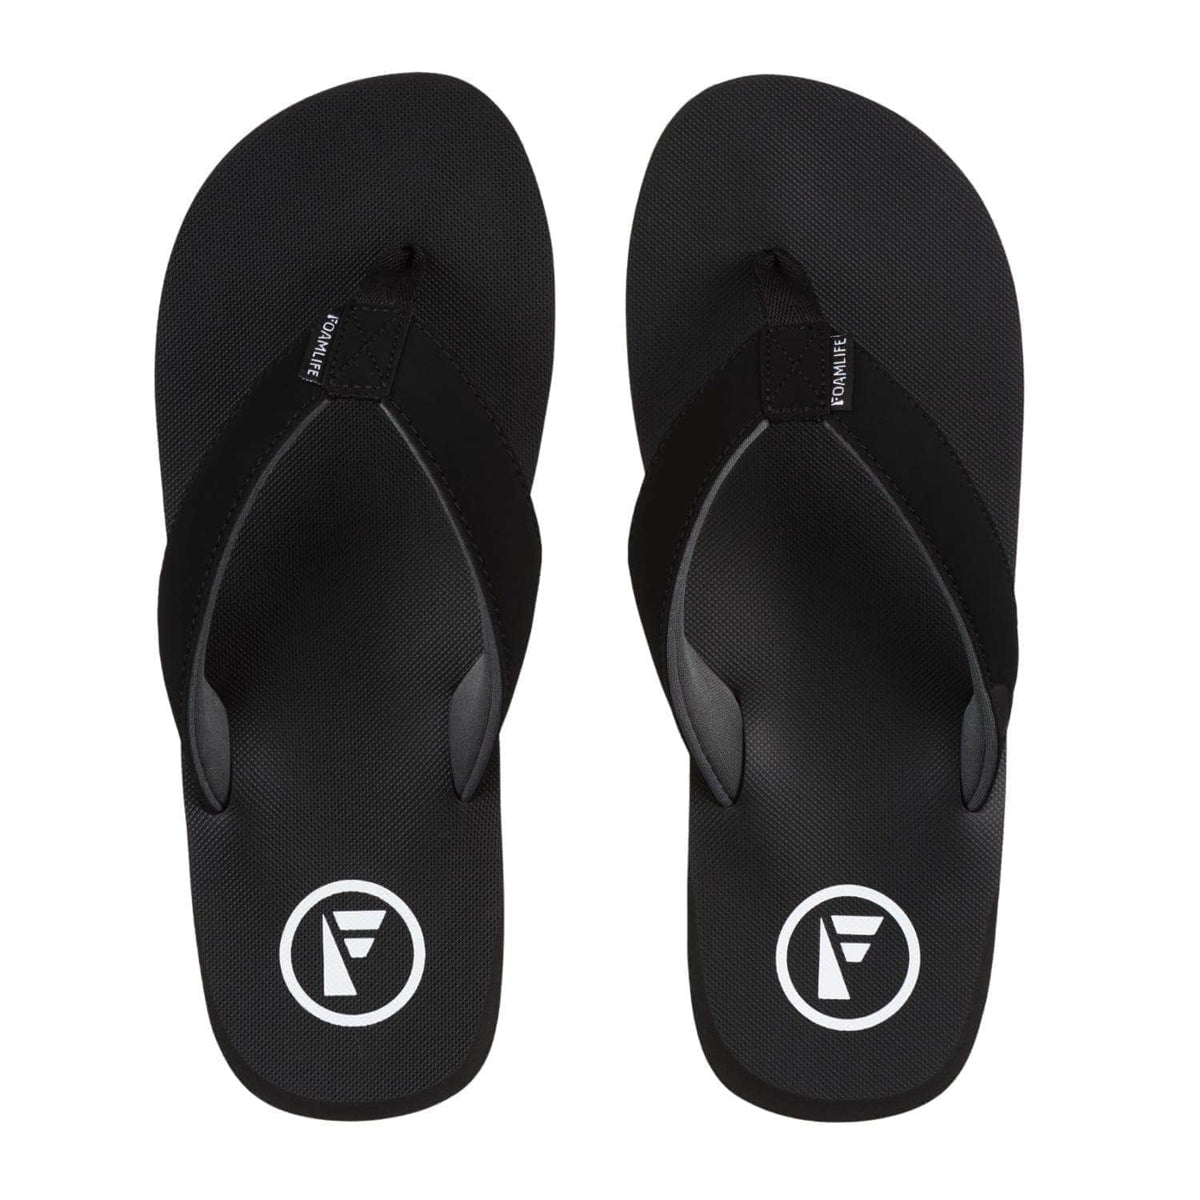 FoamLife Tarlan Flip Flops - Black - Mens Flip Flops by FoamLife